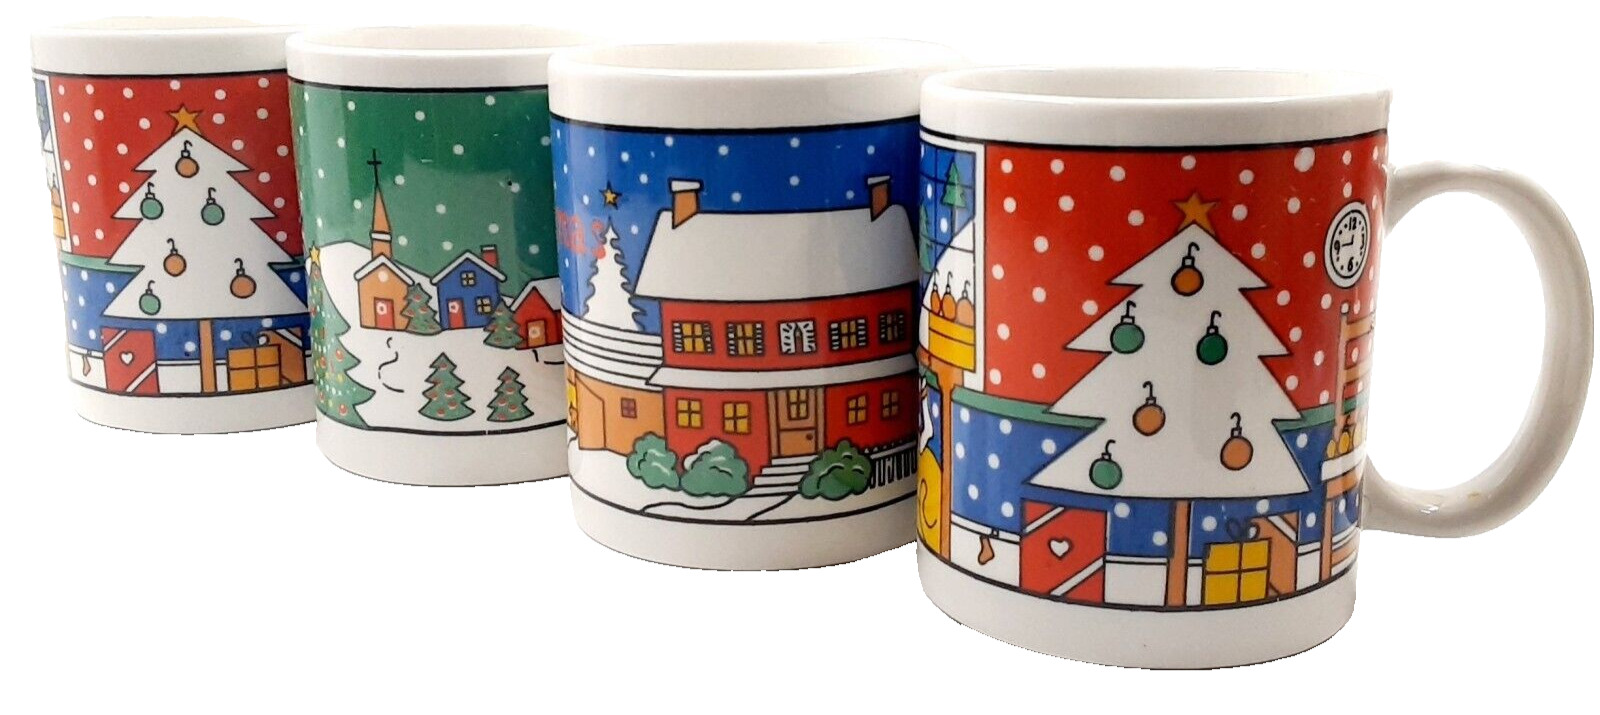 Christmas Holiday Mug Set of 4 Coffee Tea Cups New in Original Box